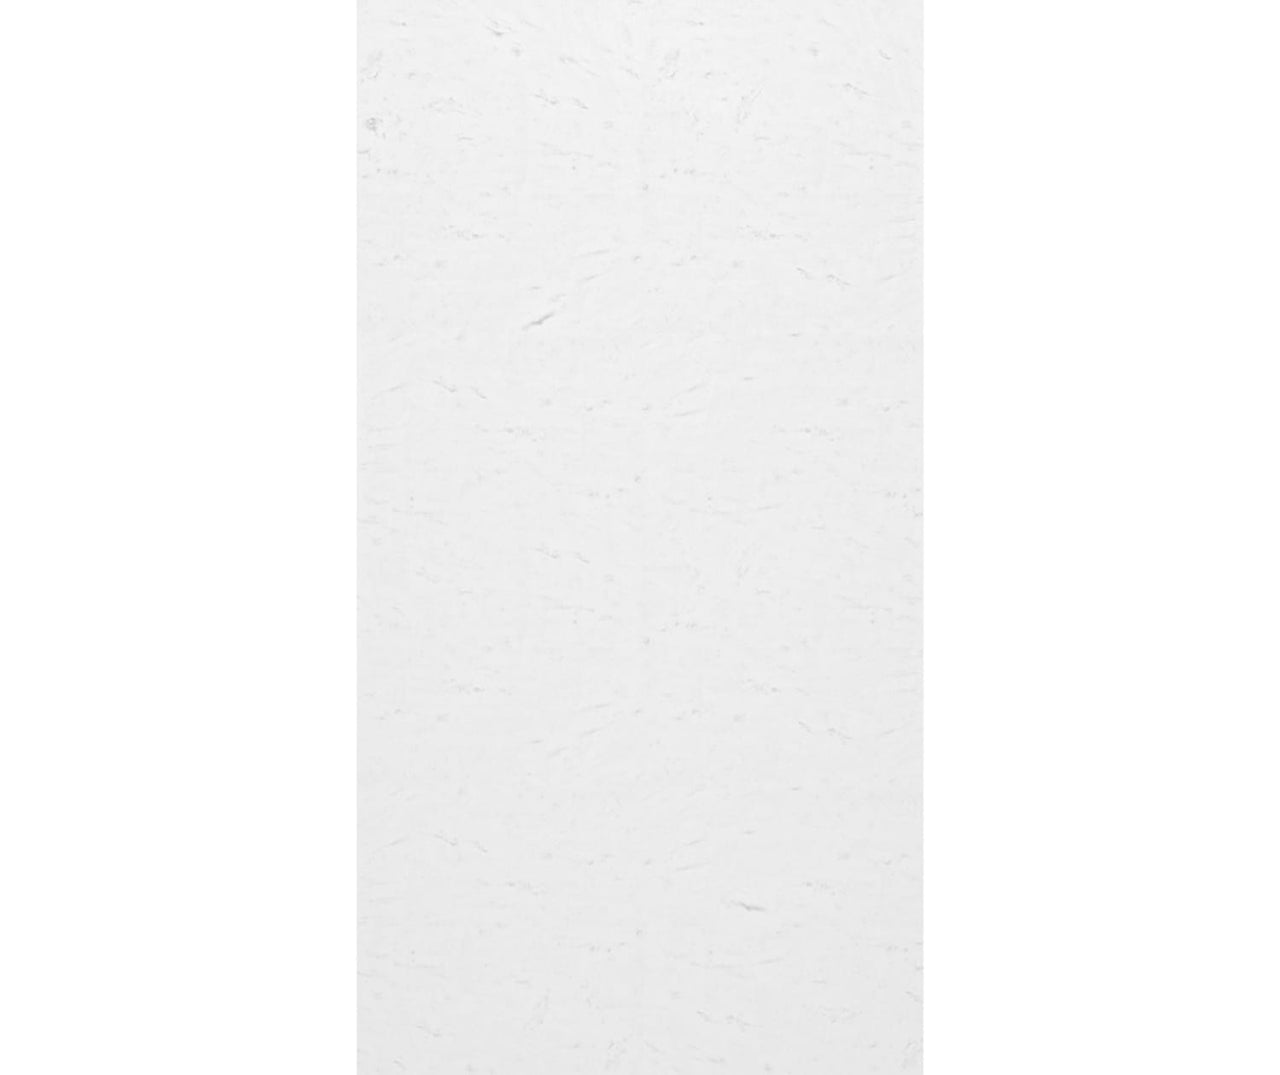 SMMK-8450-1 50 x 84 Swanstone Smooth Tile Glue up Bathtub and Shower Single Wall Panel  - BNGBath